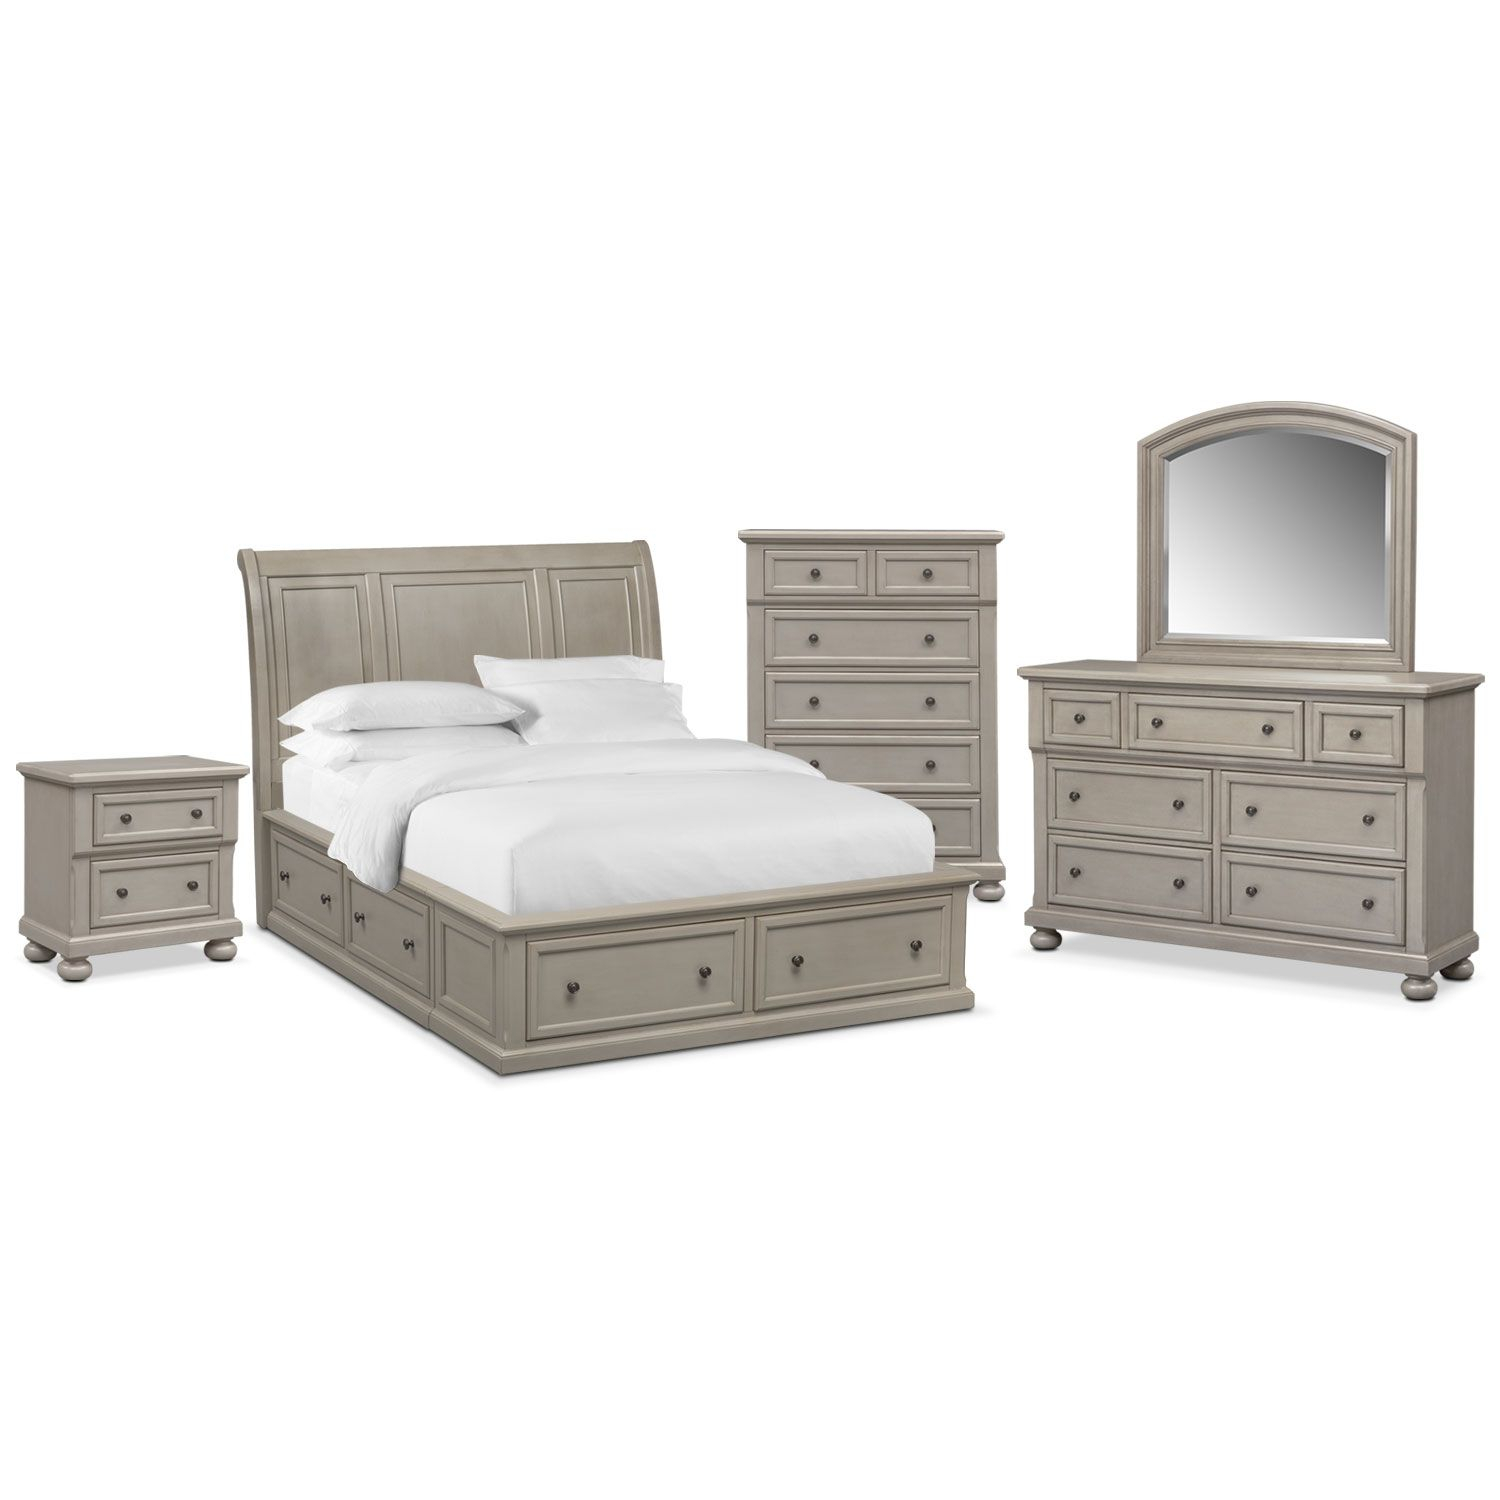 Hanover 7 Piece Storage Bedroom Set With Chest Nightstand Dresser within measurements 1500 X 1500